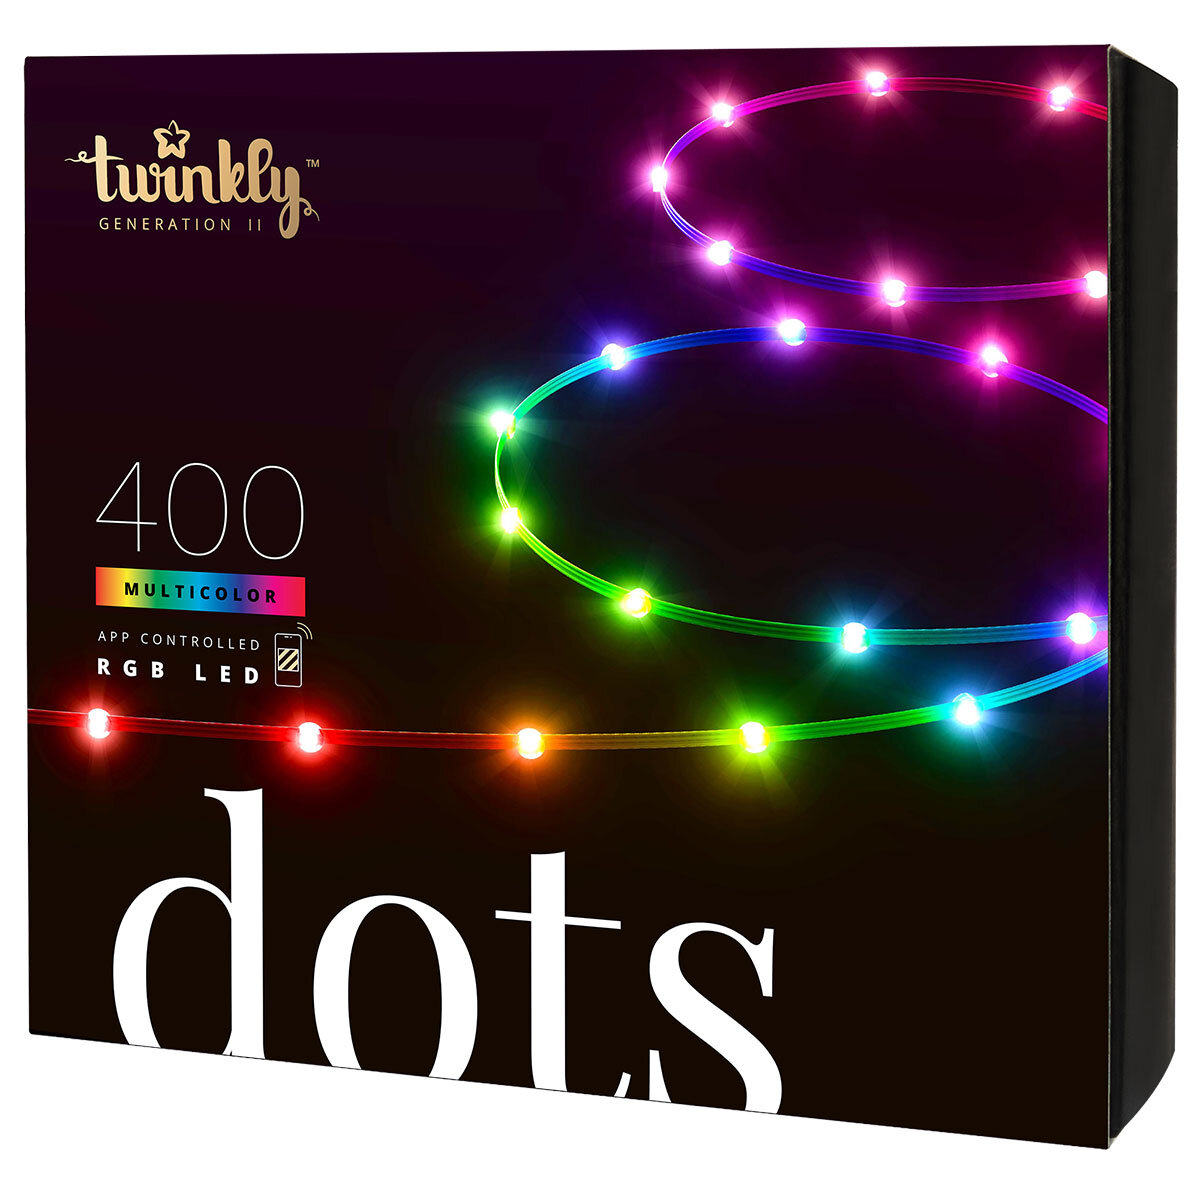 Twinkly Dots 400 LED Lights Box Image at Costco.co.uk